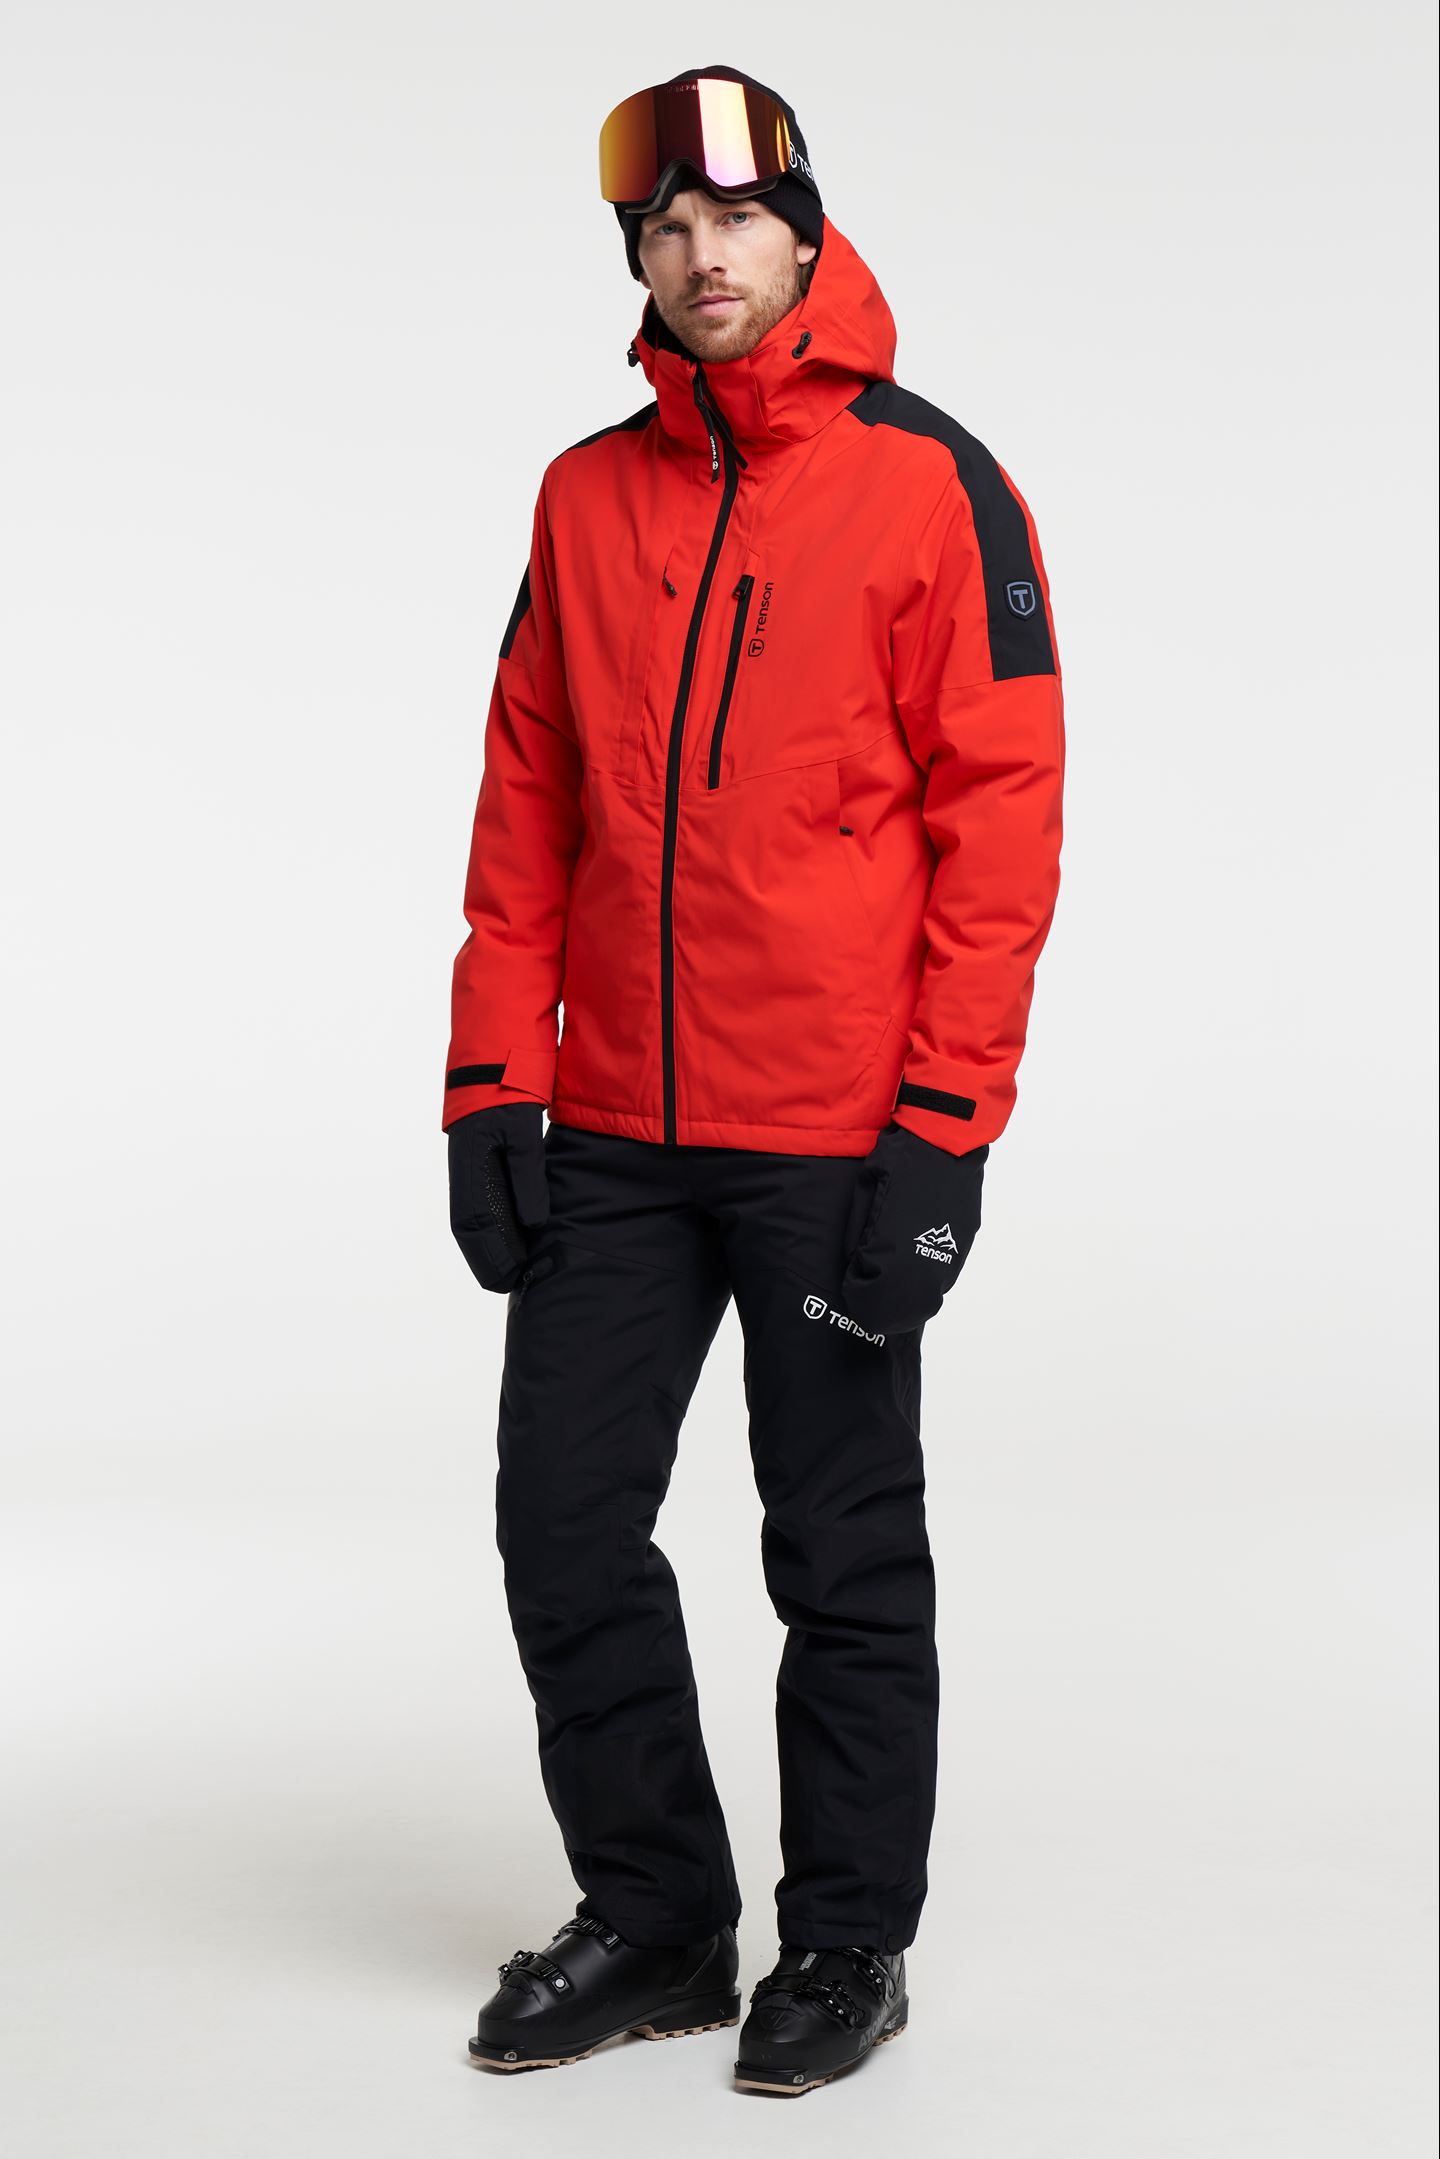 Arthur Groen Vooravond Core Ski Jacket - Warme ski-jas - Orange